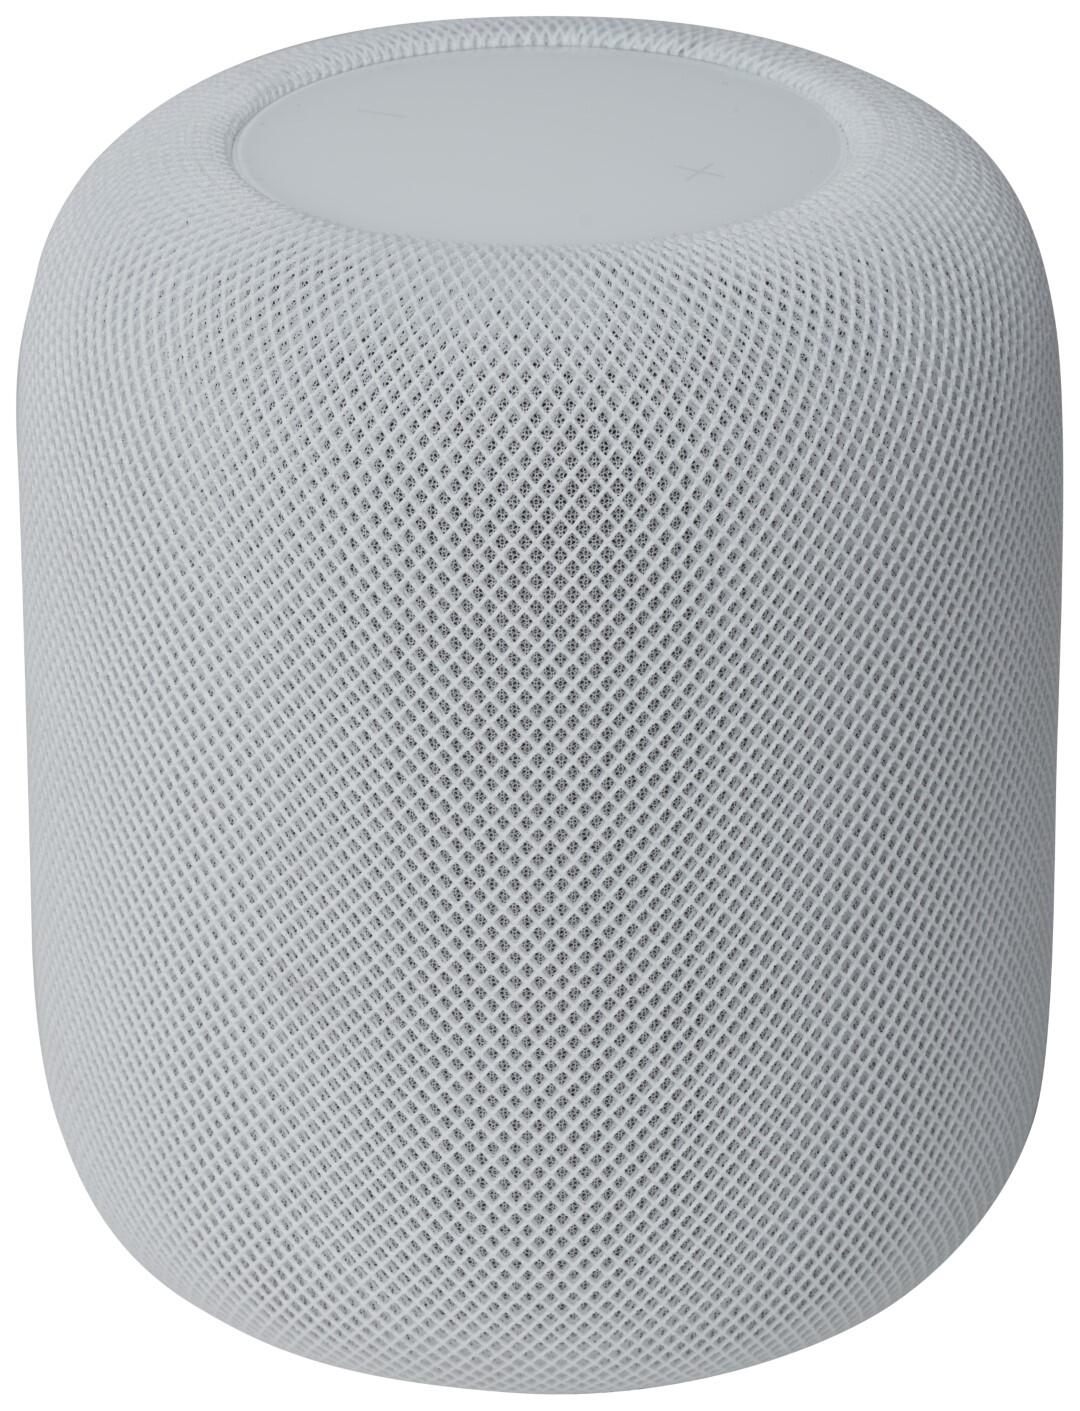 HomePod (2nd generation) Apple